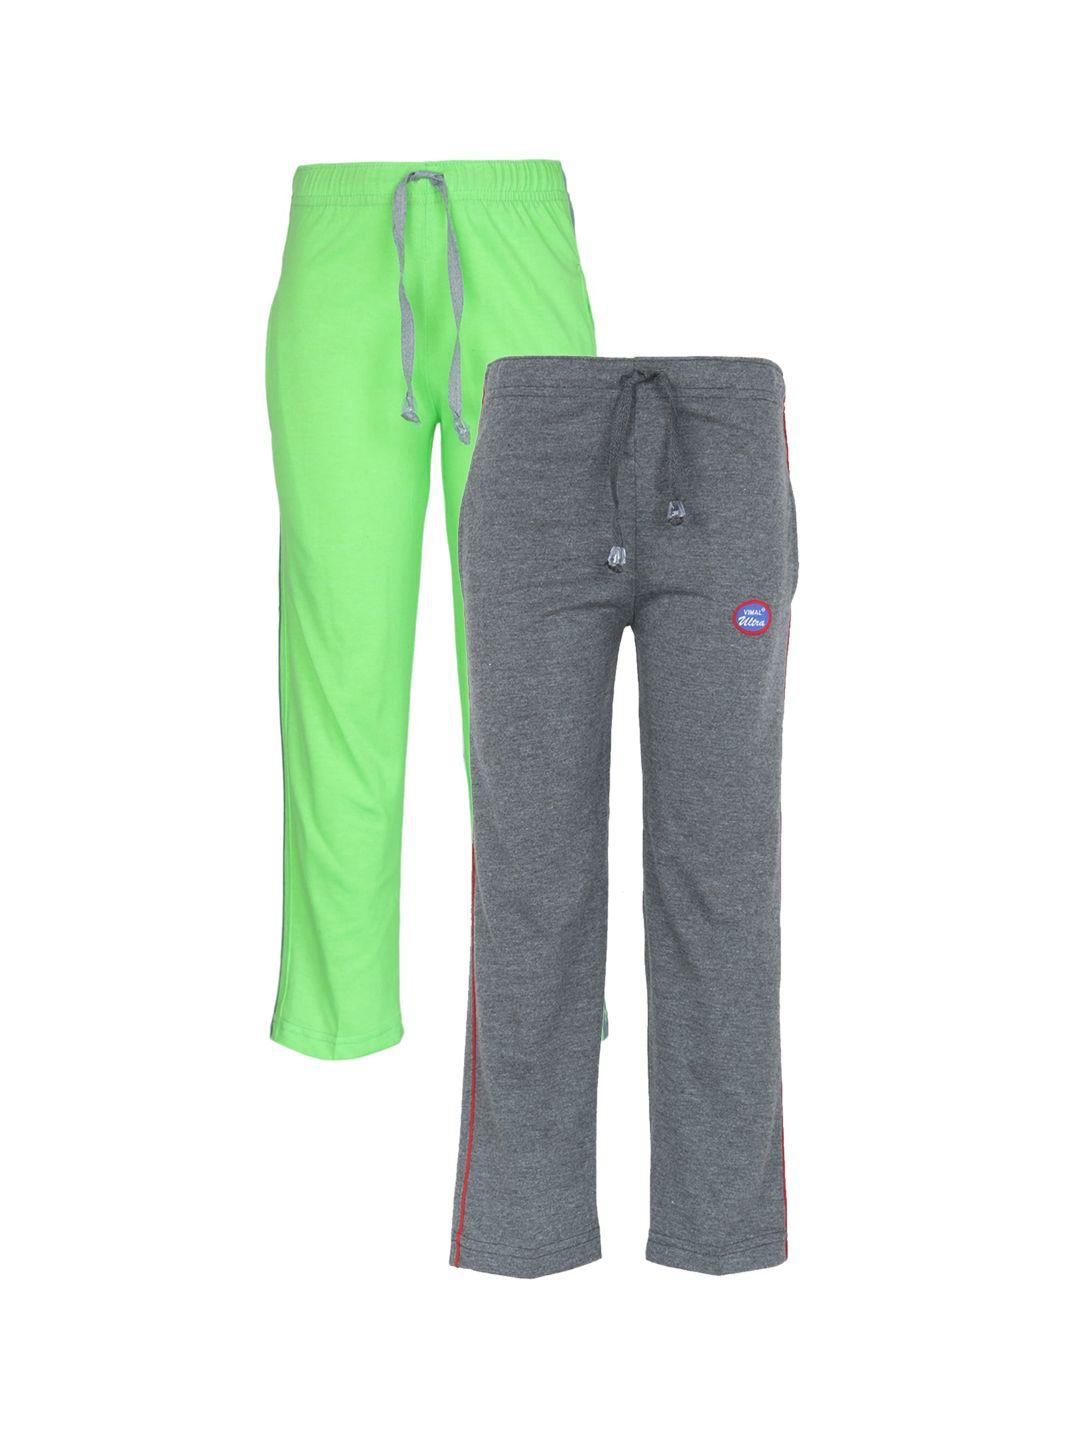 vimal jonney unisex kids grey & green pack of 2 solid track pants